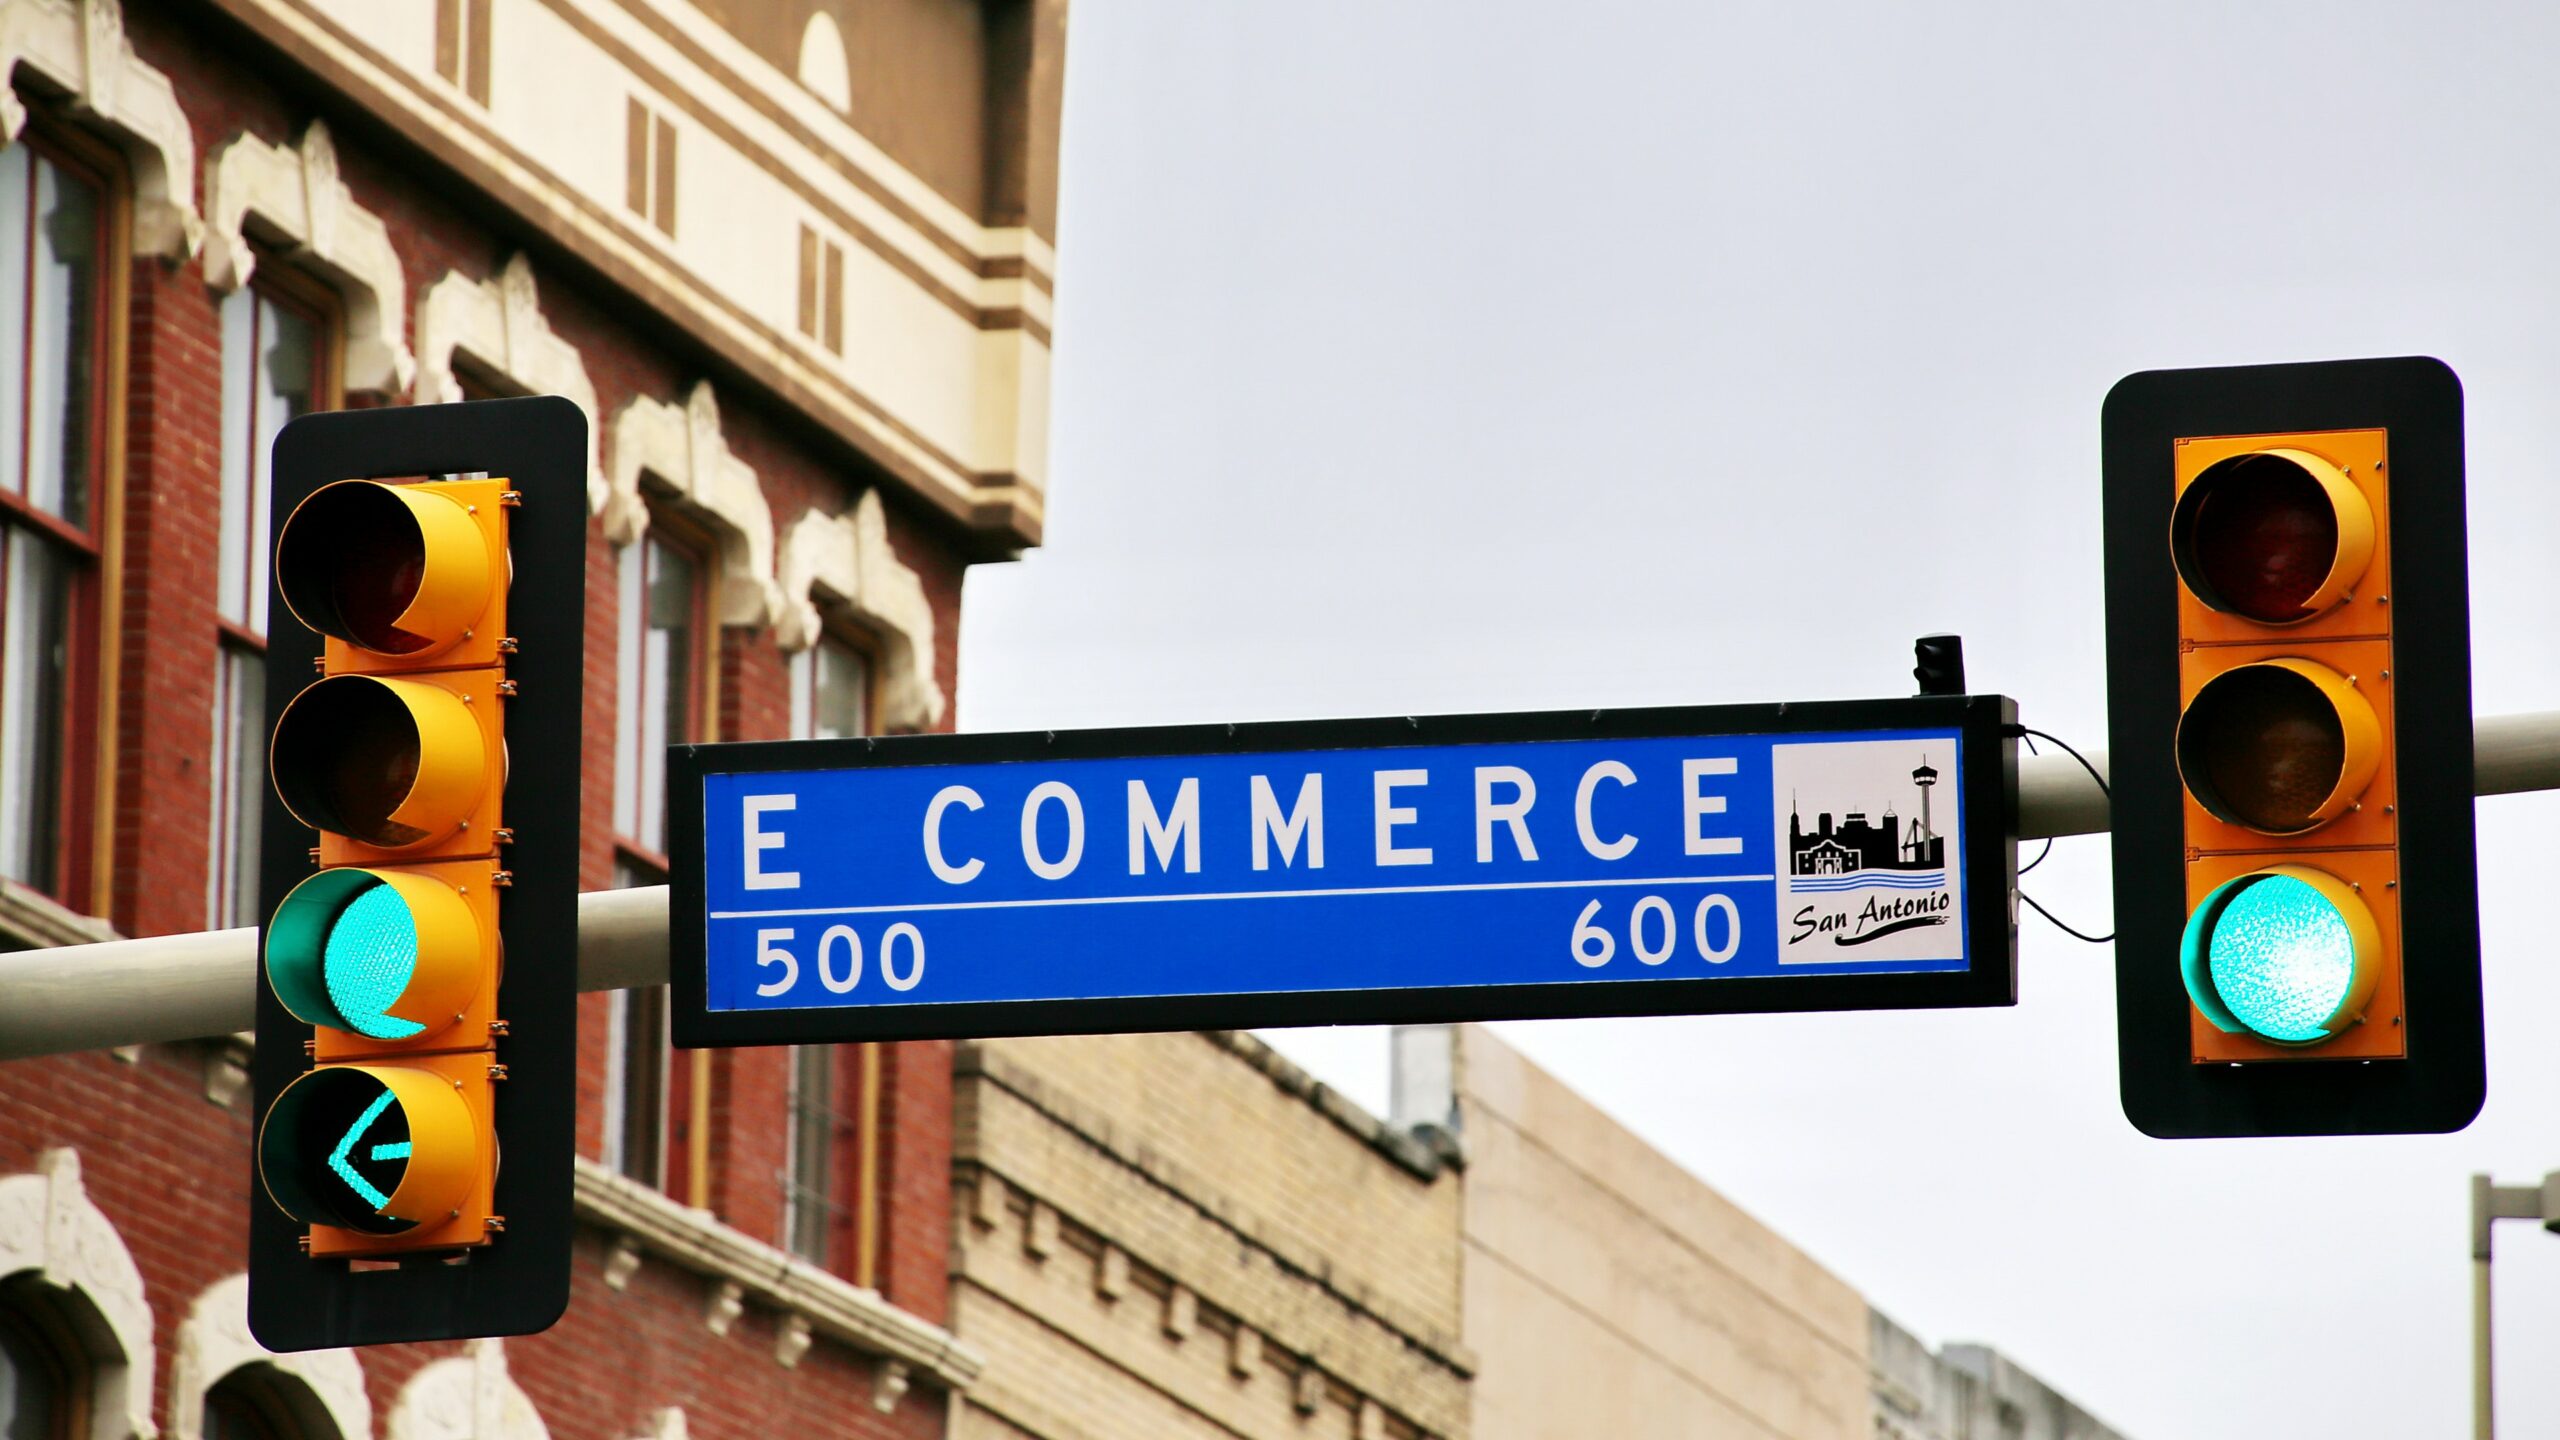 Street sign in San Antonio, Texas displaying E Commerce.